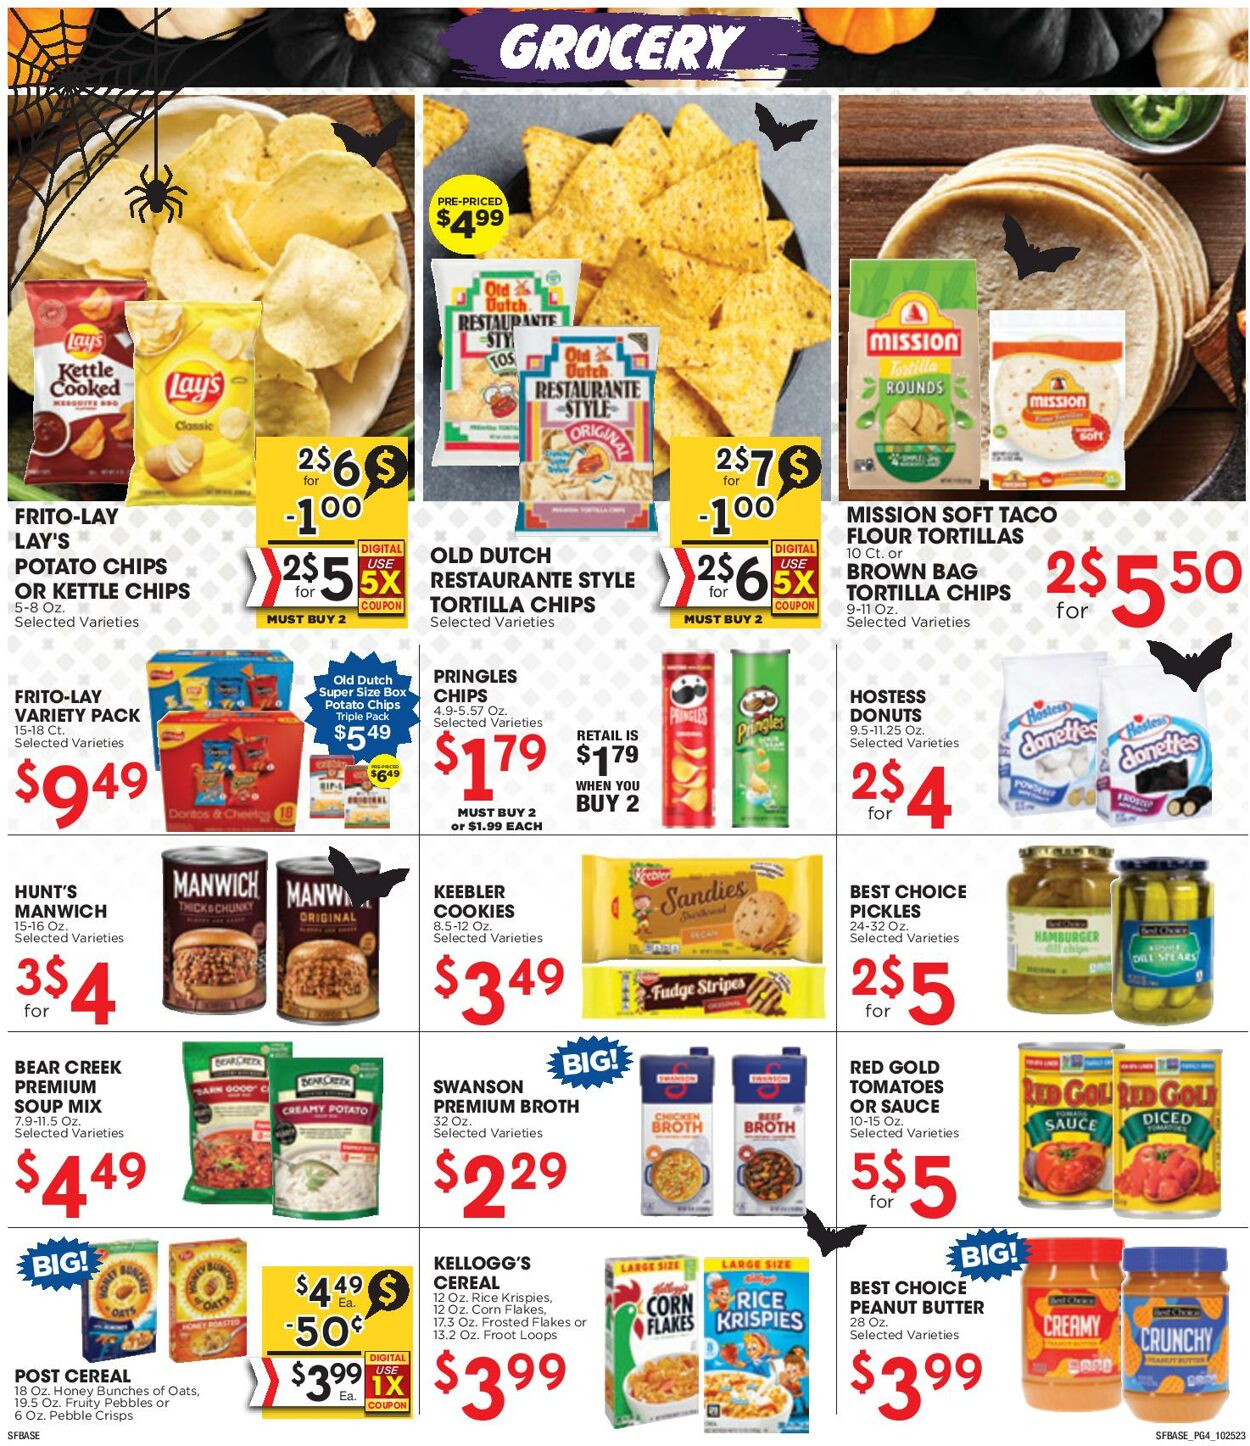 Weekly ad Sunshine Foods 10/25/2023 - 10/31/2023